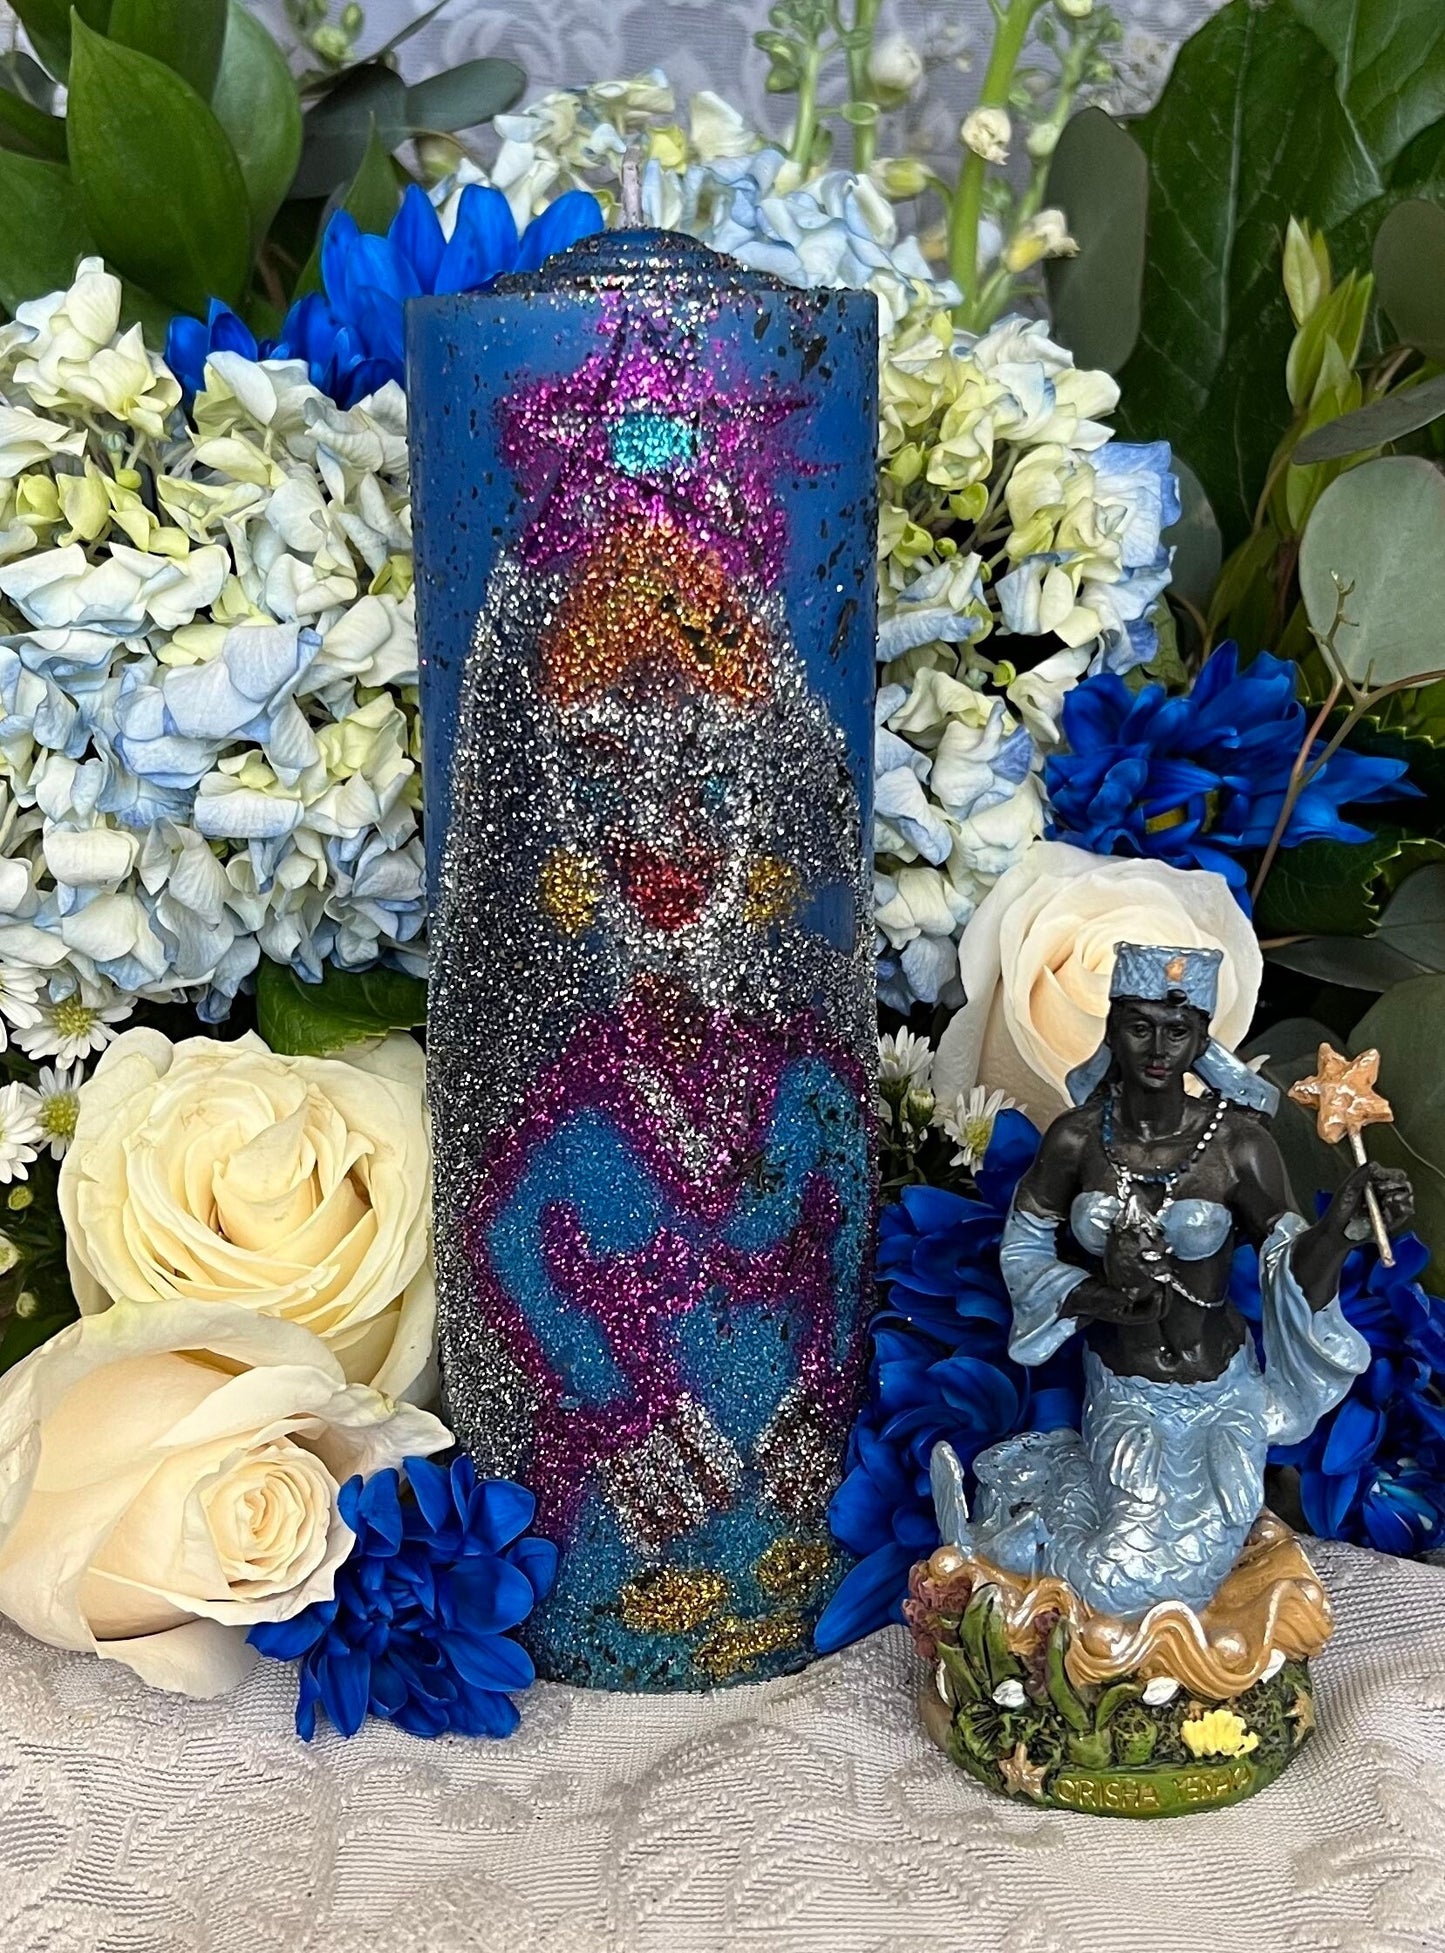 Yemaya Hand Carved Candle + Family Protection + Orisha + Santeria + Ifa + Yoruba + Lukumi + Santerismo